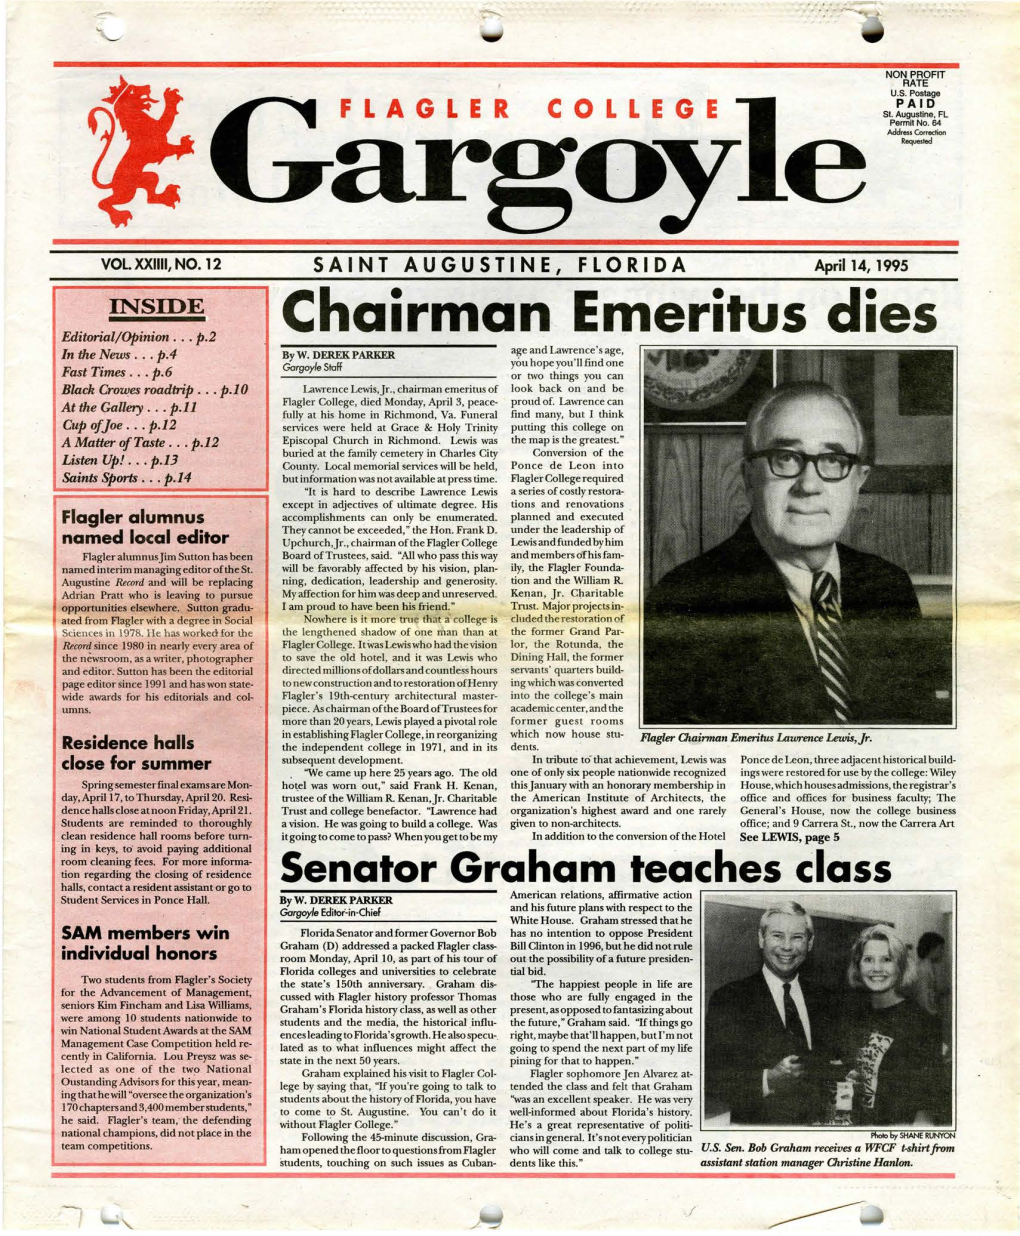 Chairman Emeritus Dies Editorial/Opinion